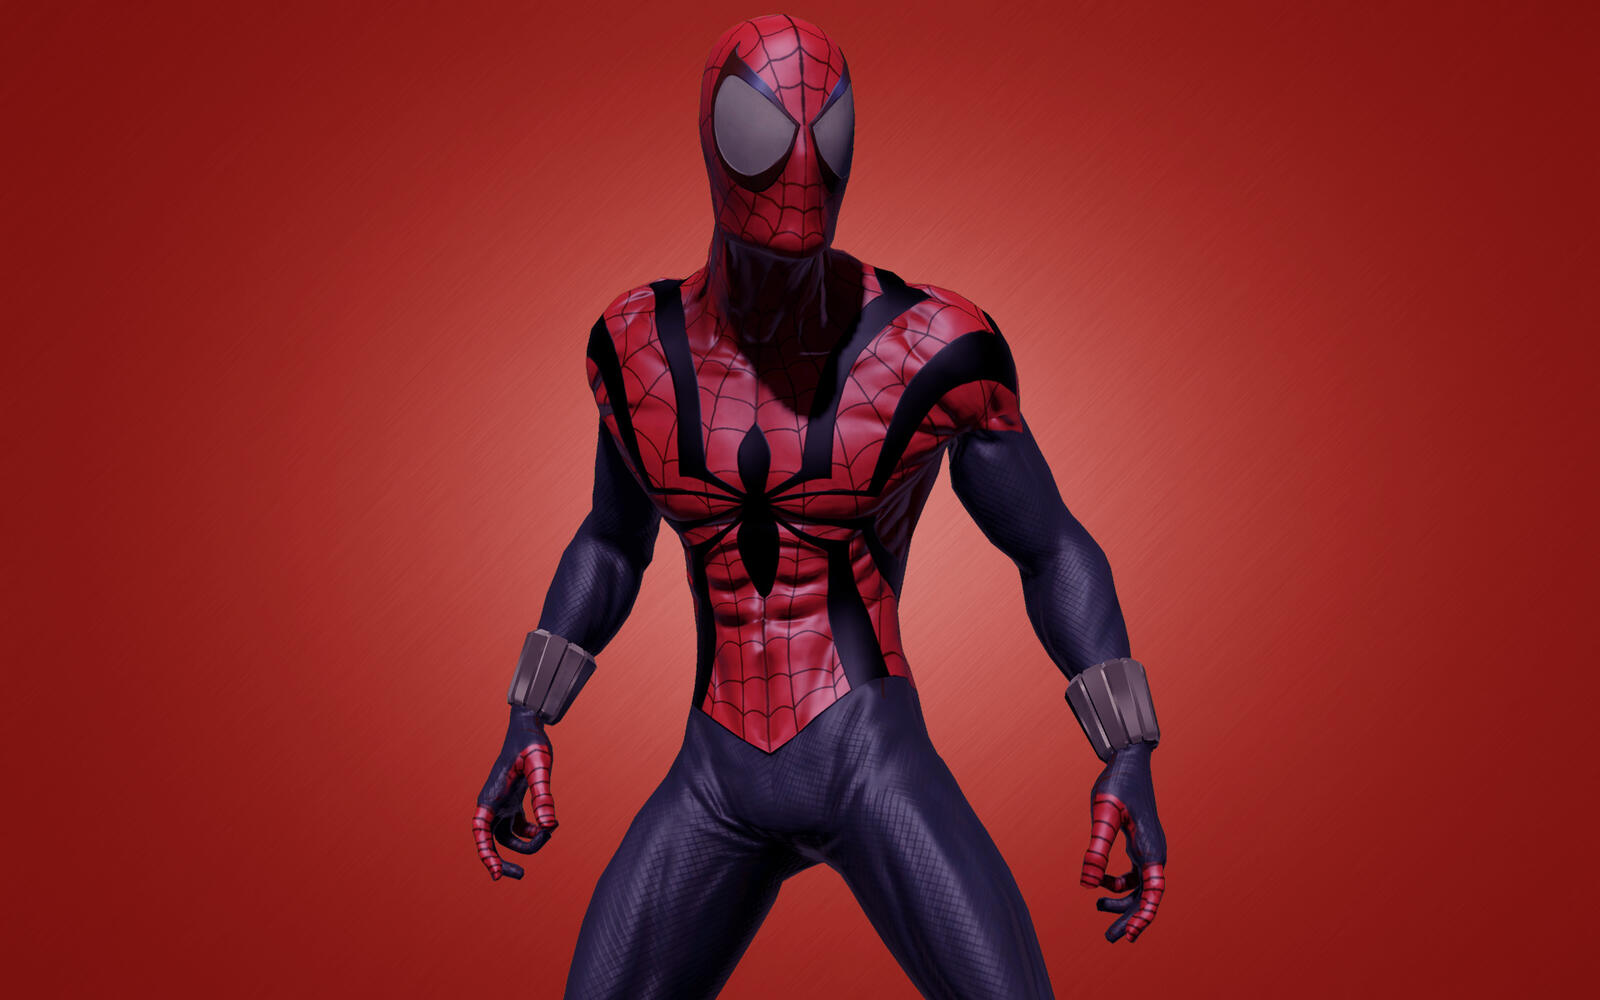 Wallpapers man spider superhero costume on the desktop